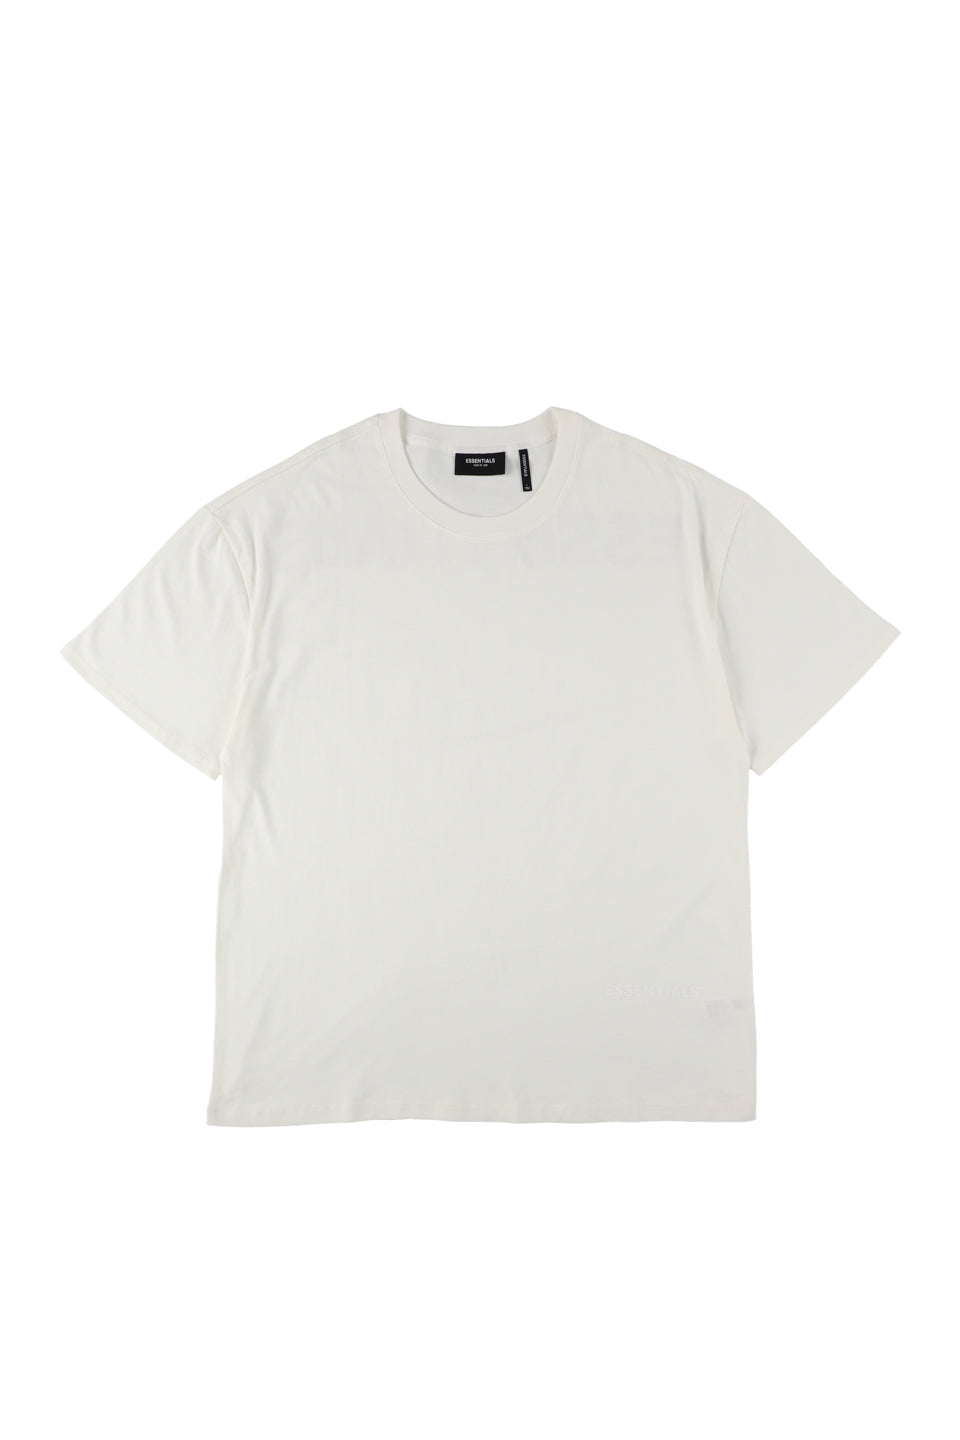 XS FOG Essentials White T-Shirt ②